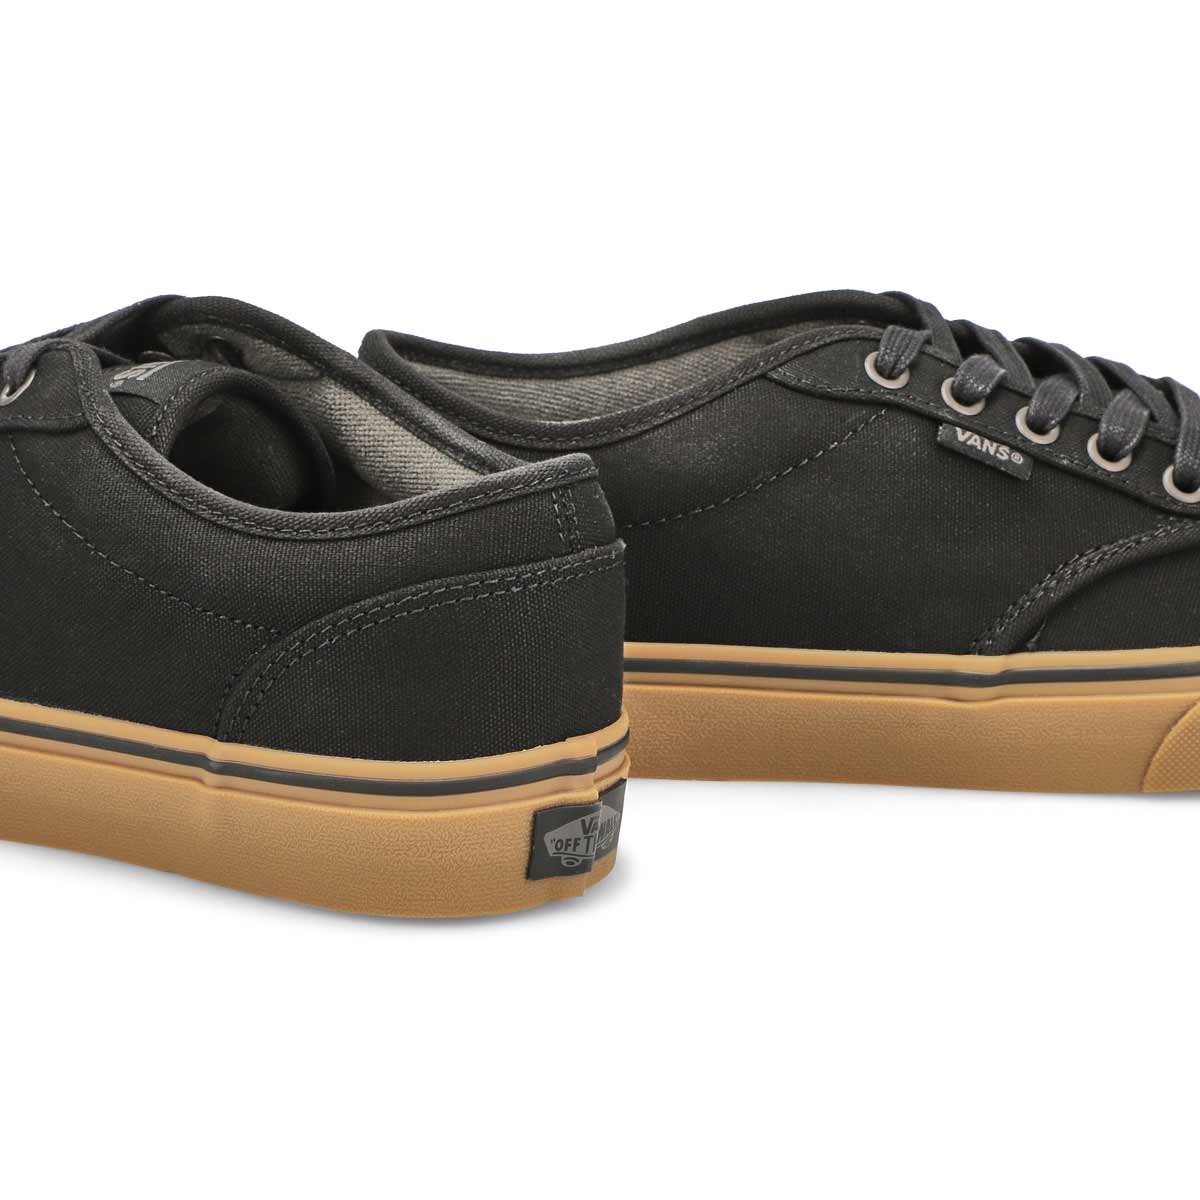 Men's Atwood Sneaker - Black/Gum